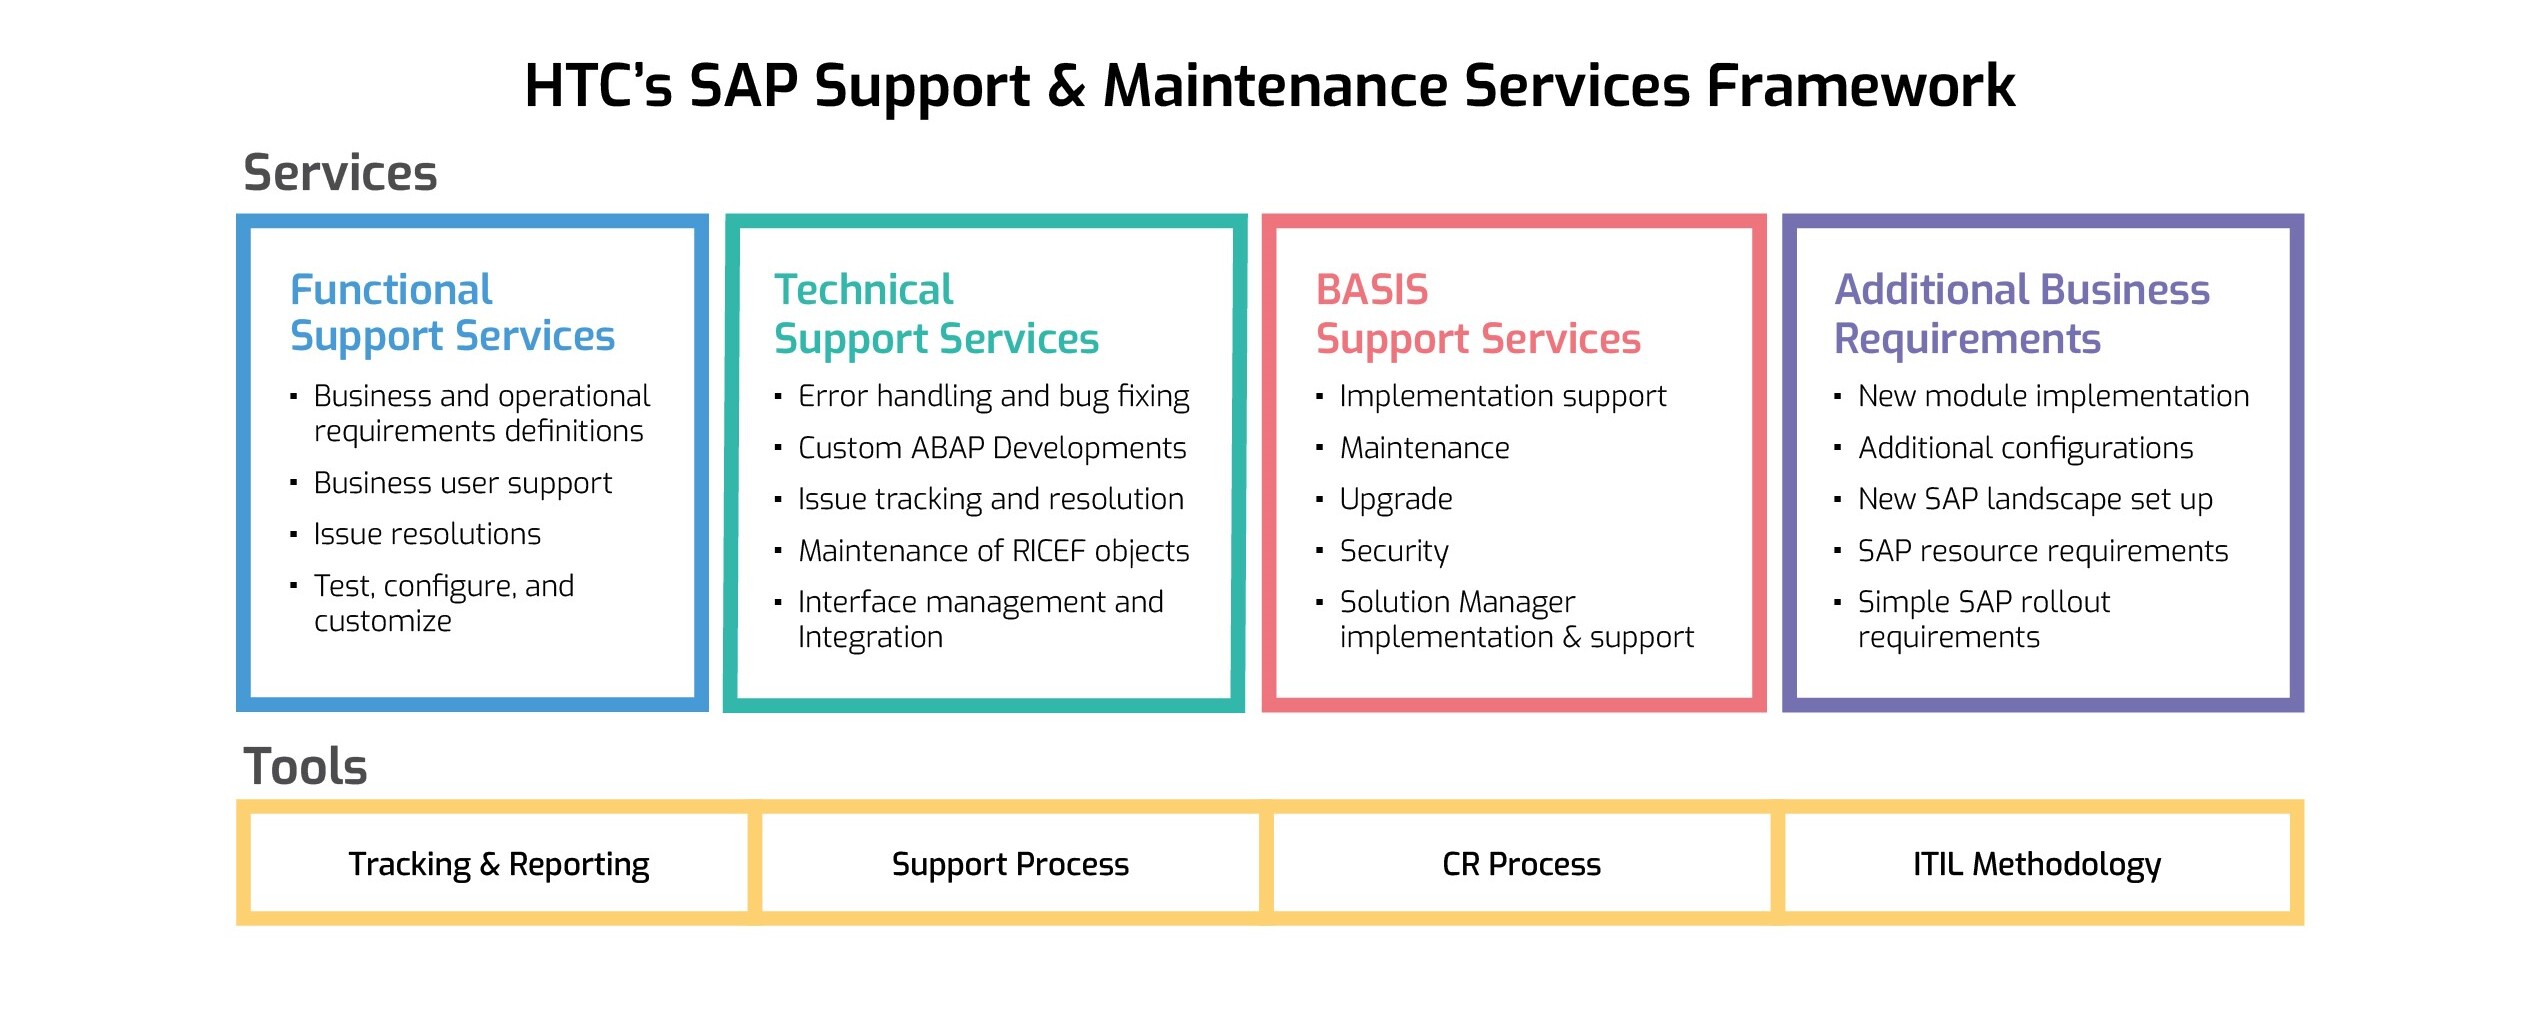 HTC's SAP Support & Maintenance Services Framework